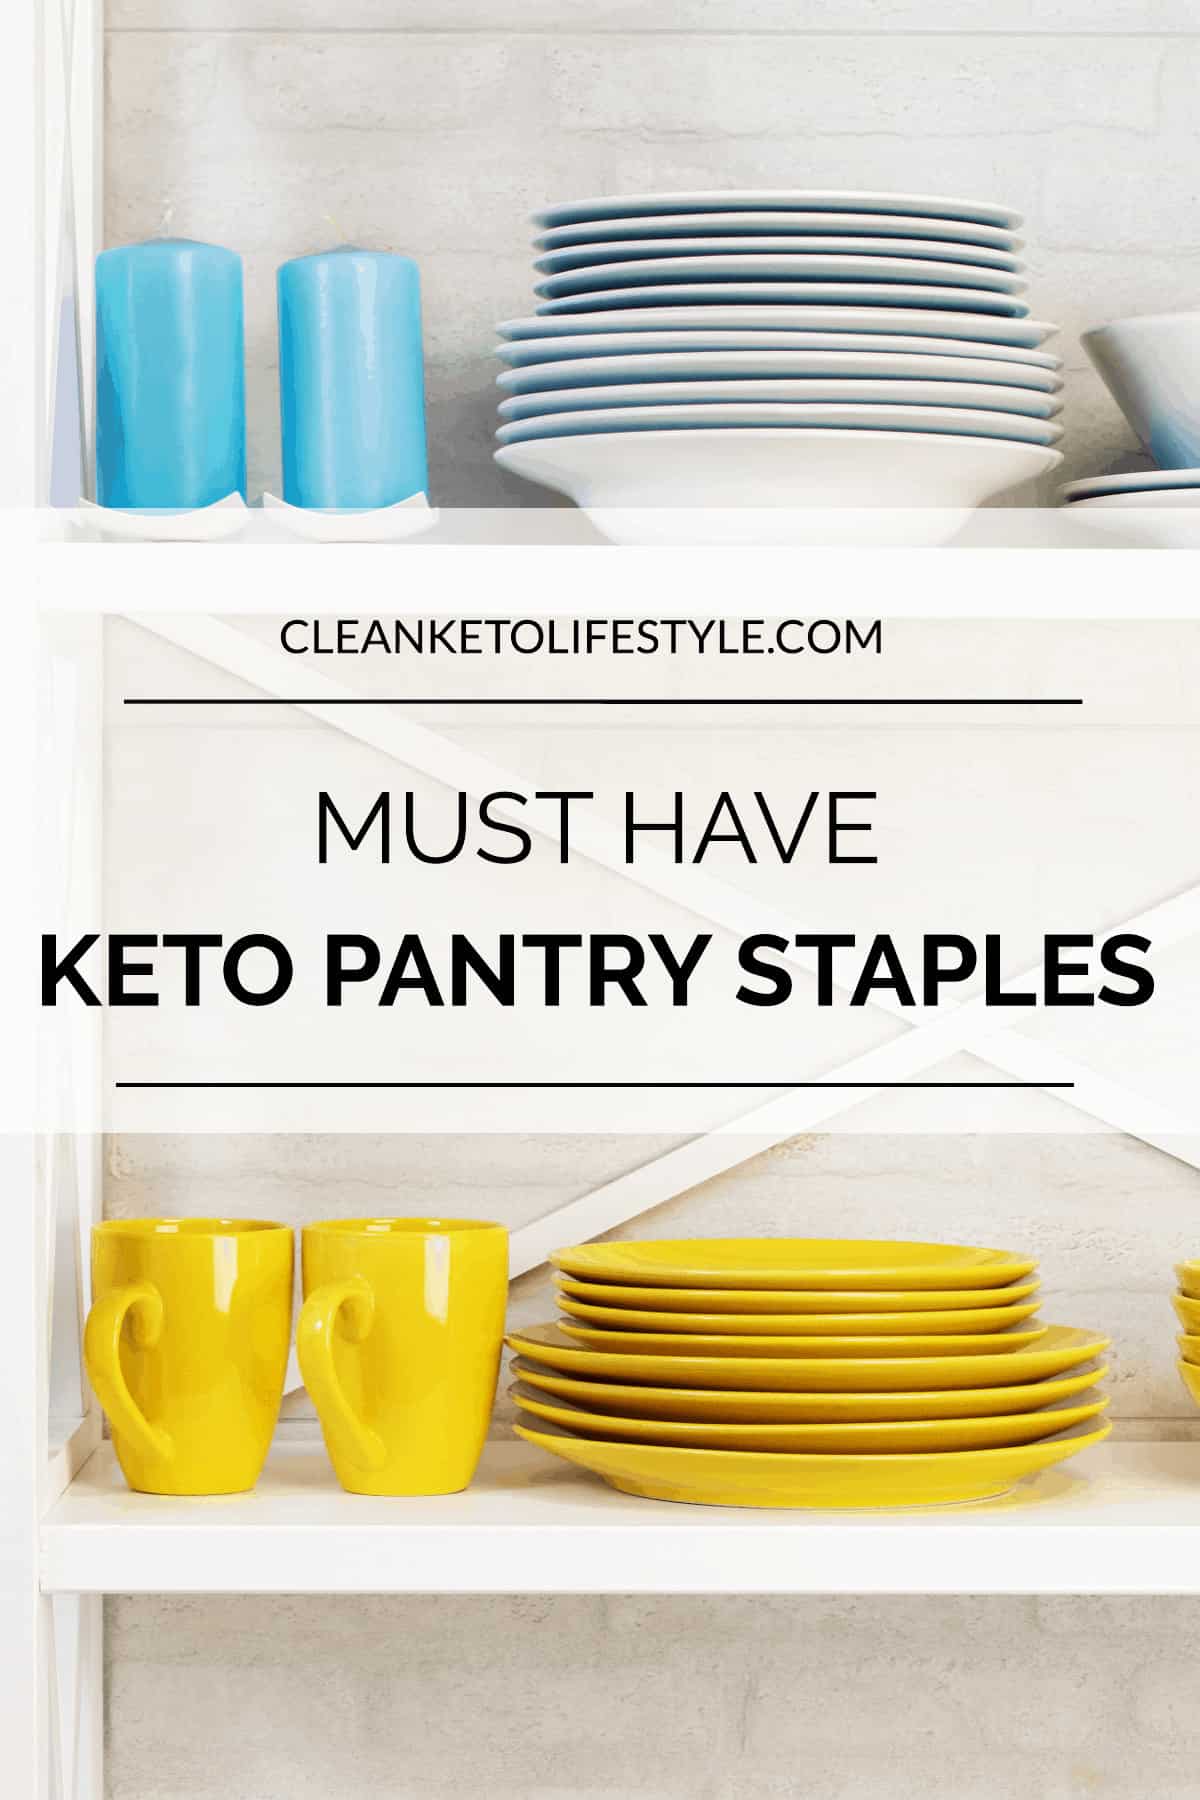 keto pantry staples graphic over shelves